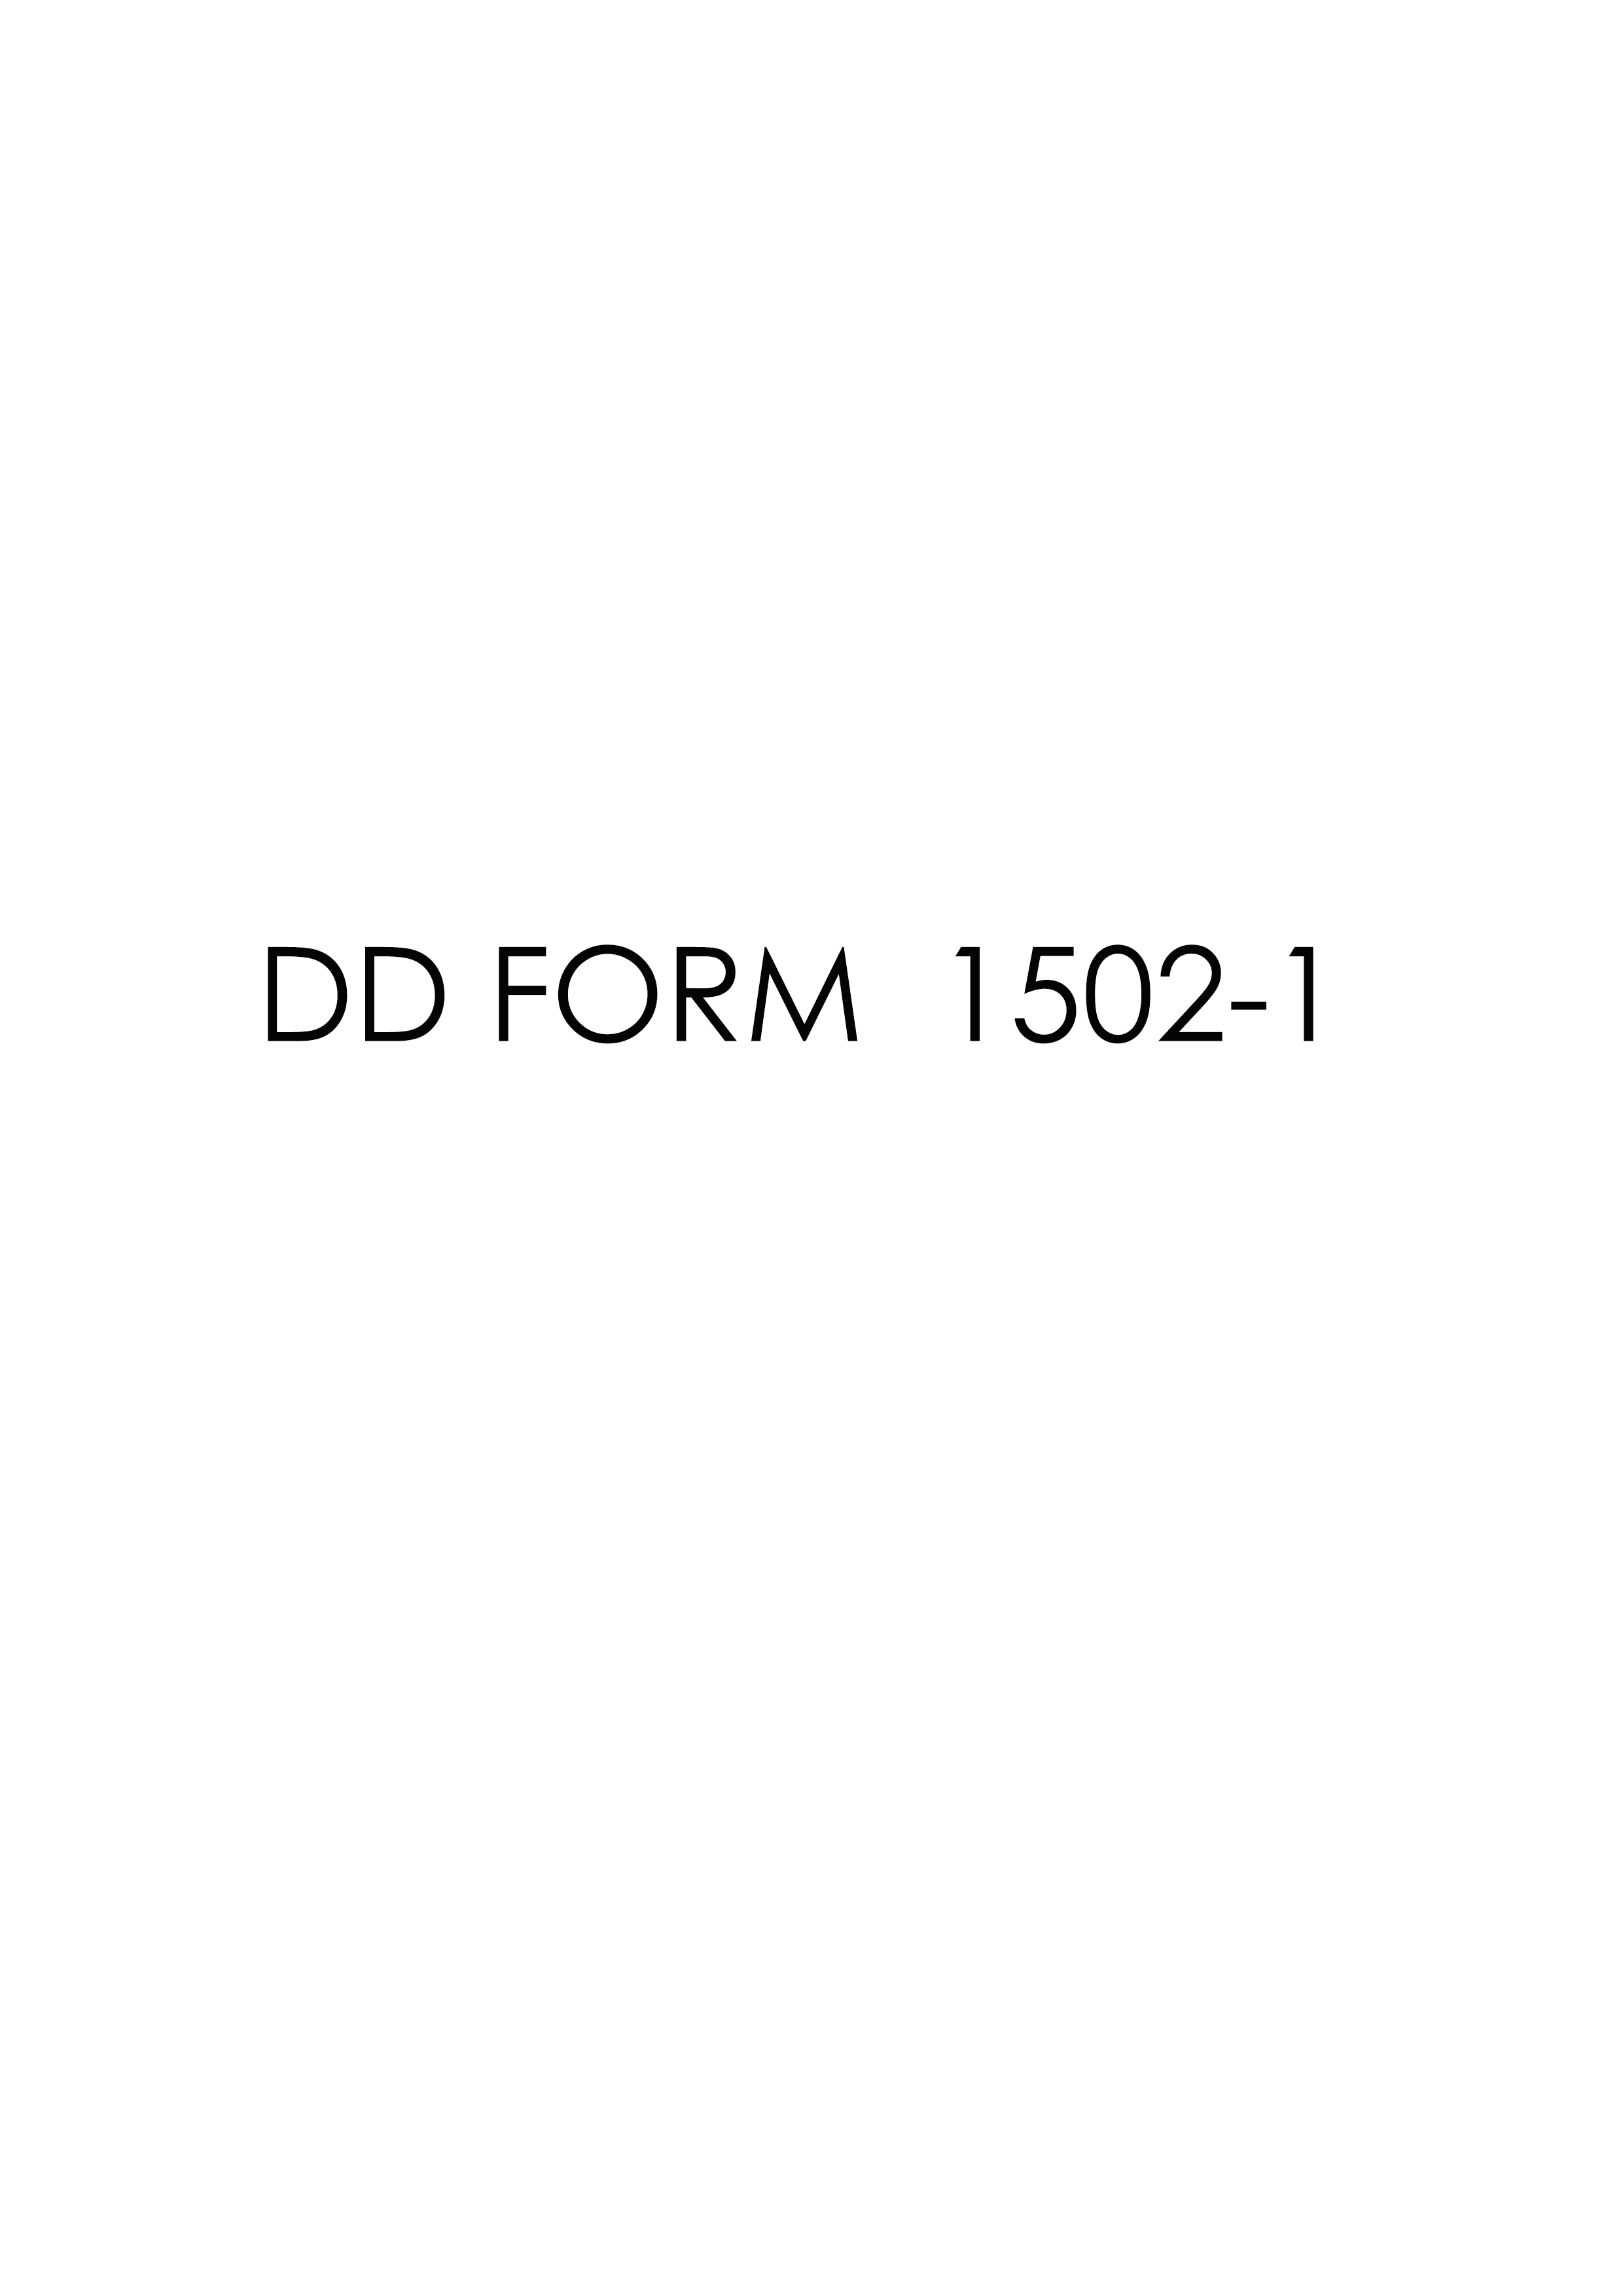 Download dd form 1502-1